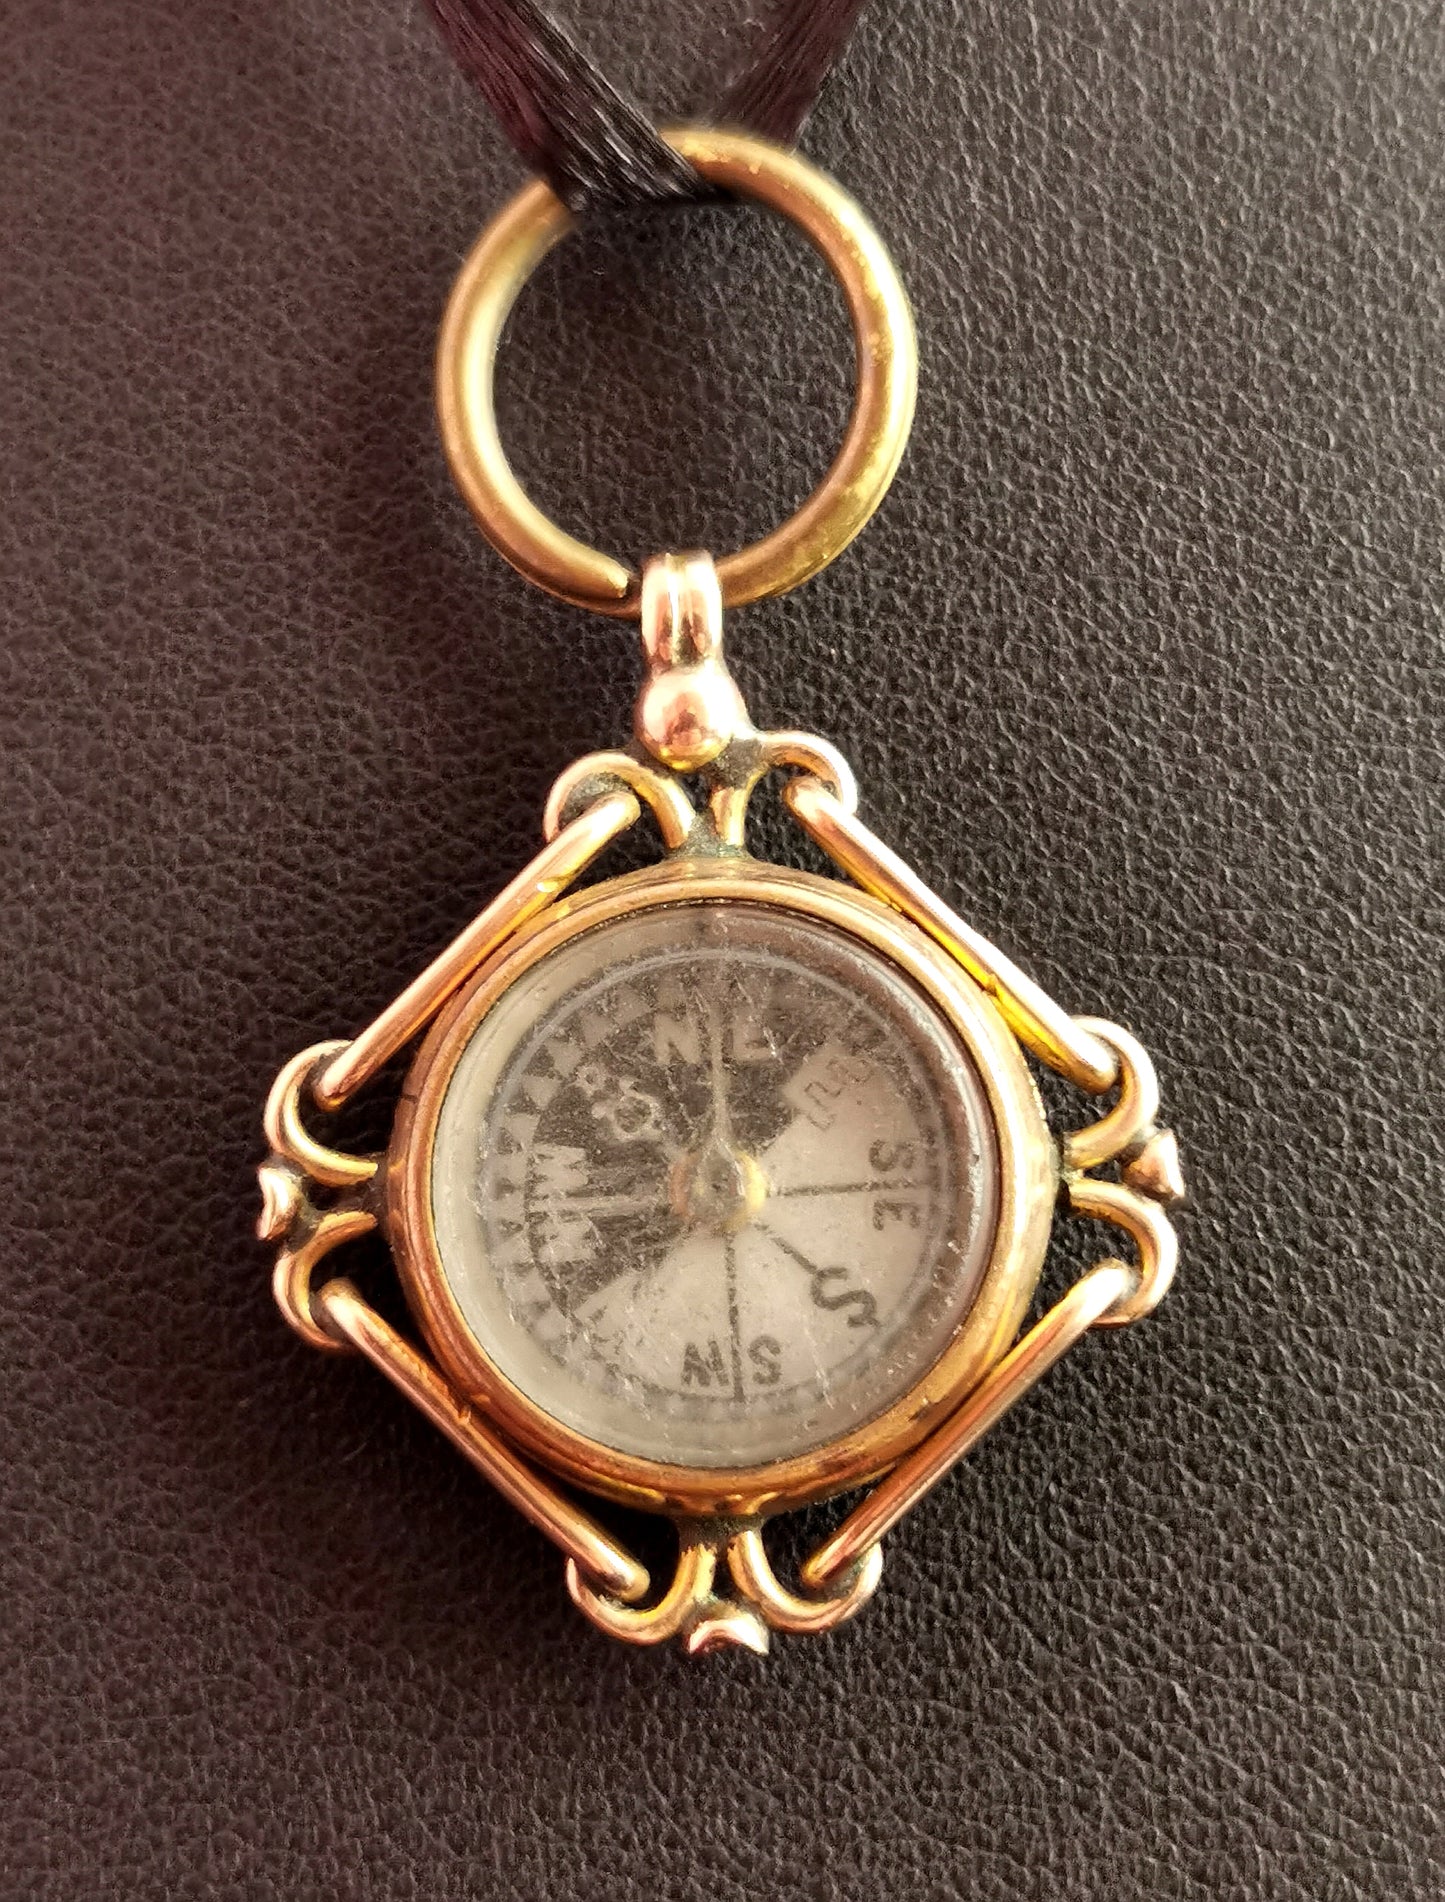 Antique 9ct Rose gold compass pendant, Carnelian seal fob